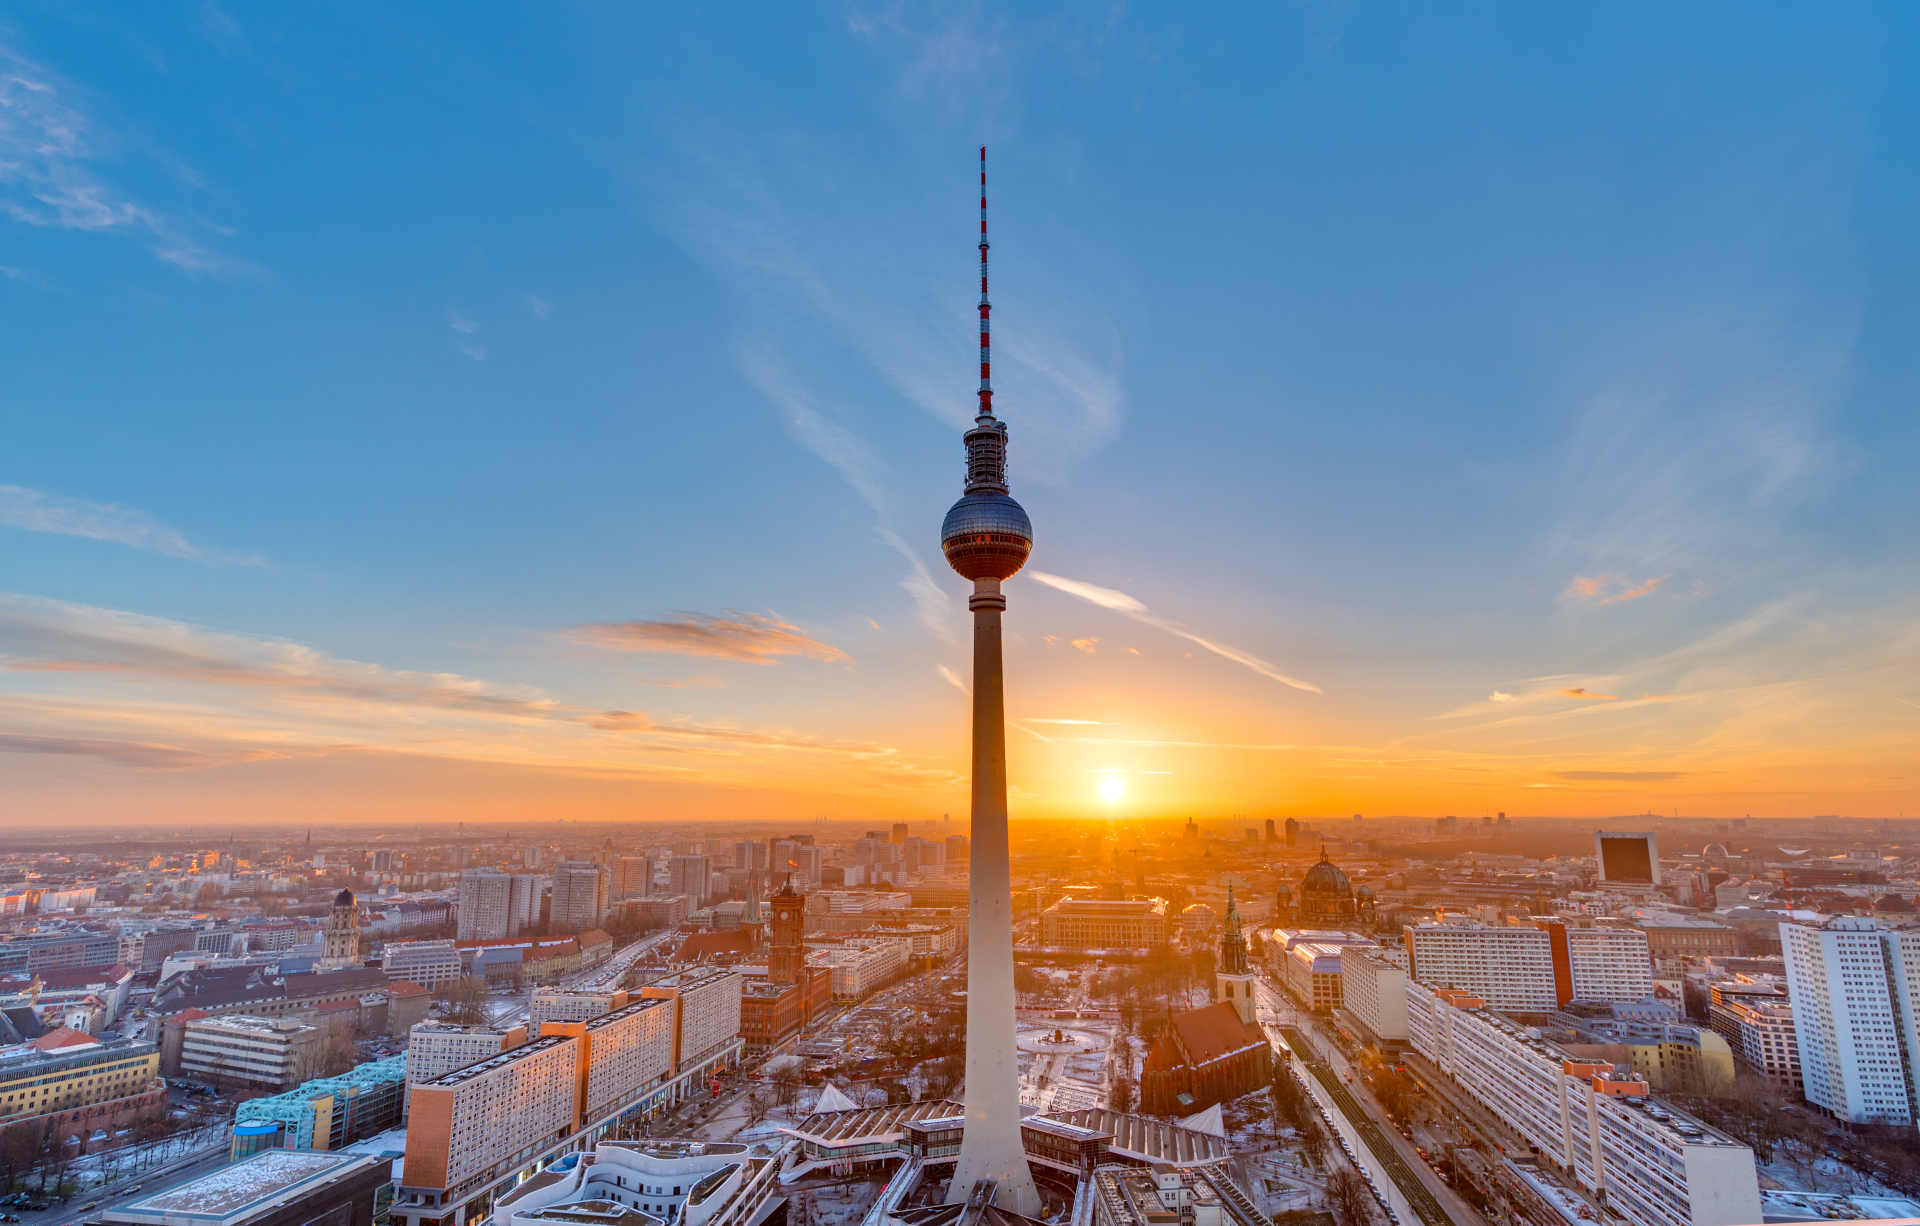 Bitcoin logo illuminates Berlin's iconic TV tower
